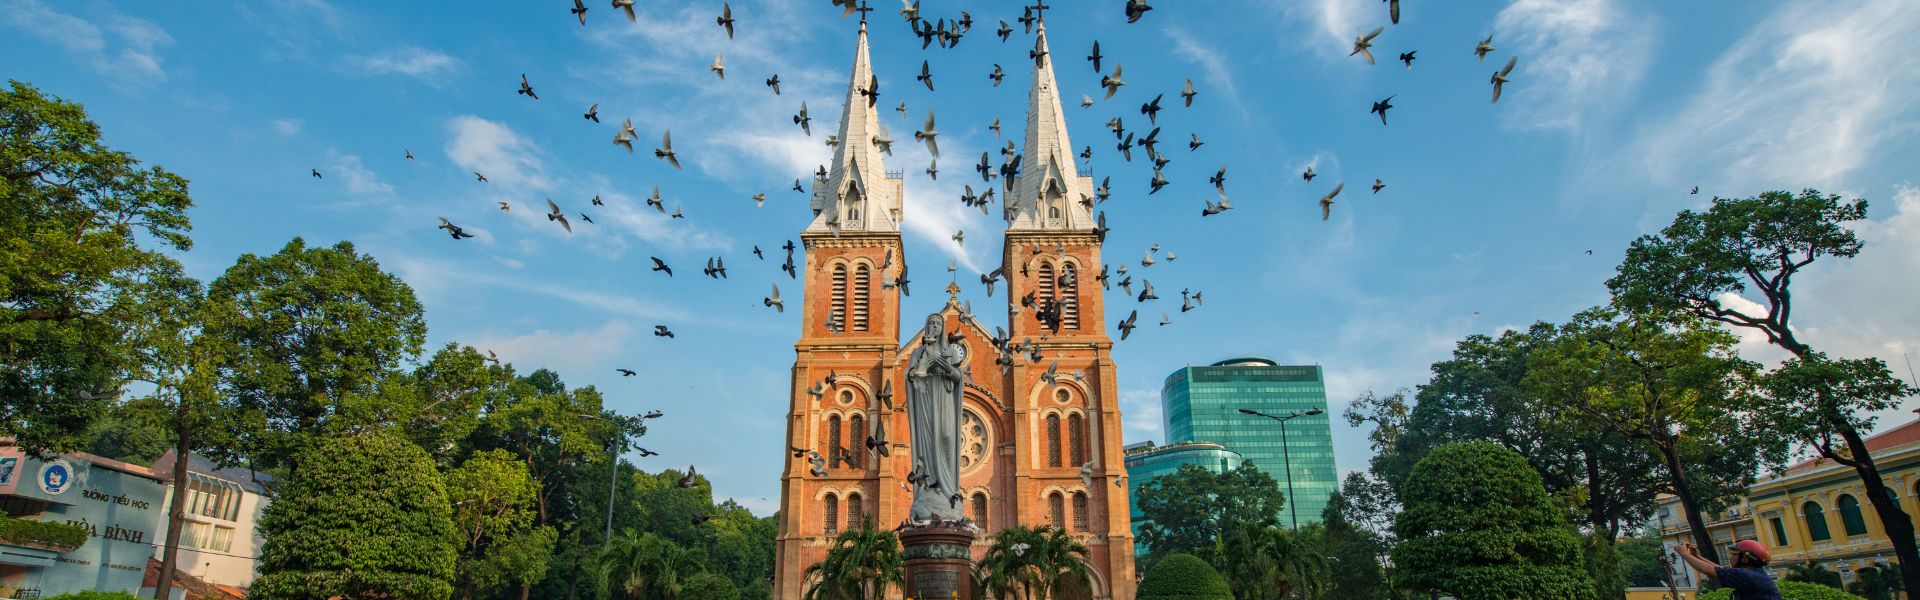 Saigon - Consejos de viaje | Guía de viajes a Vietnam